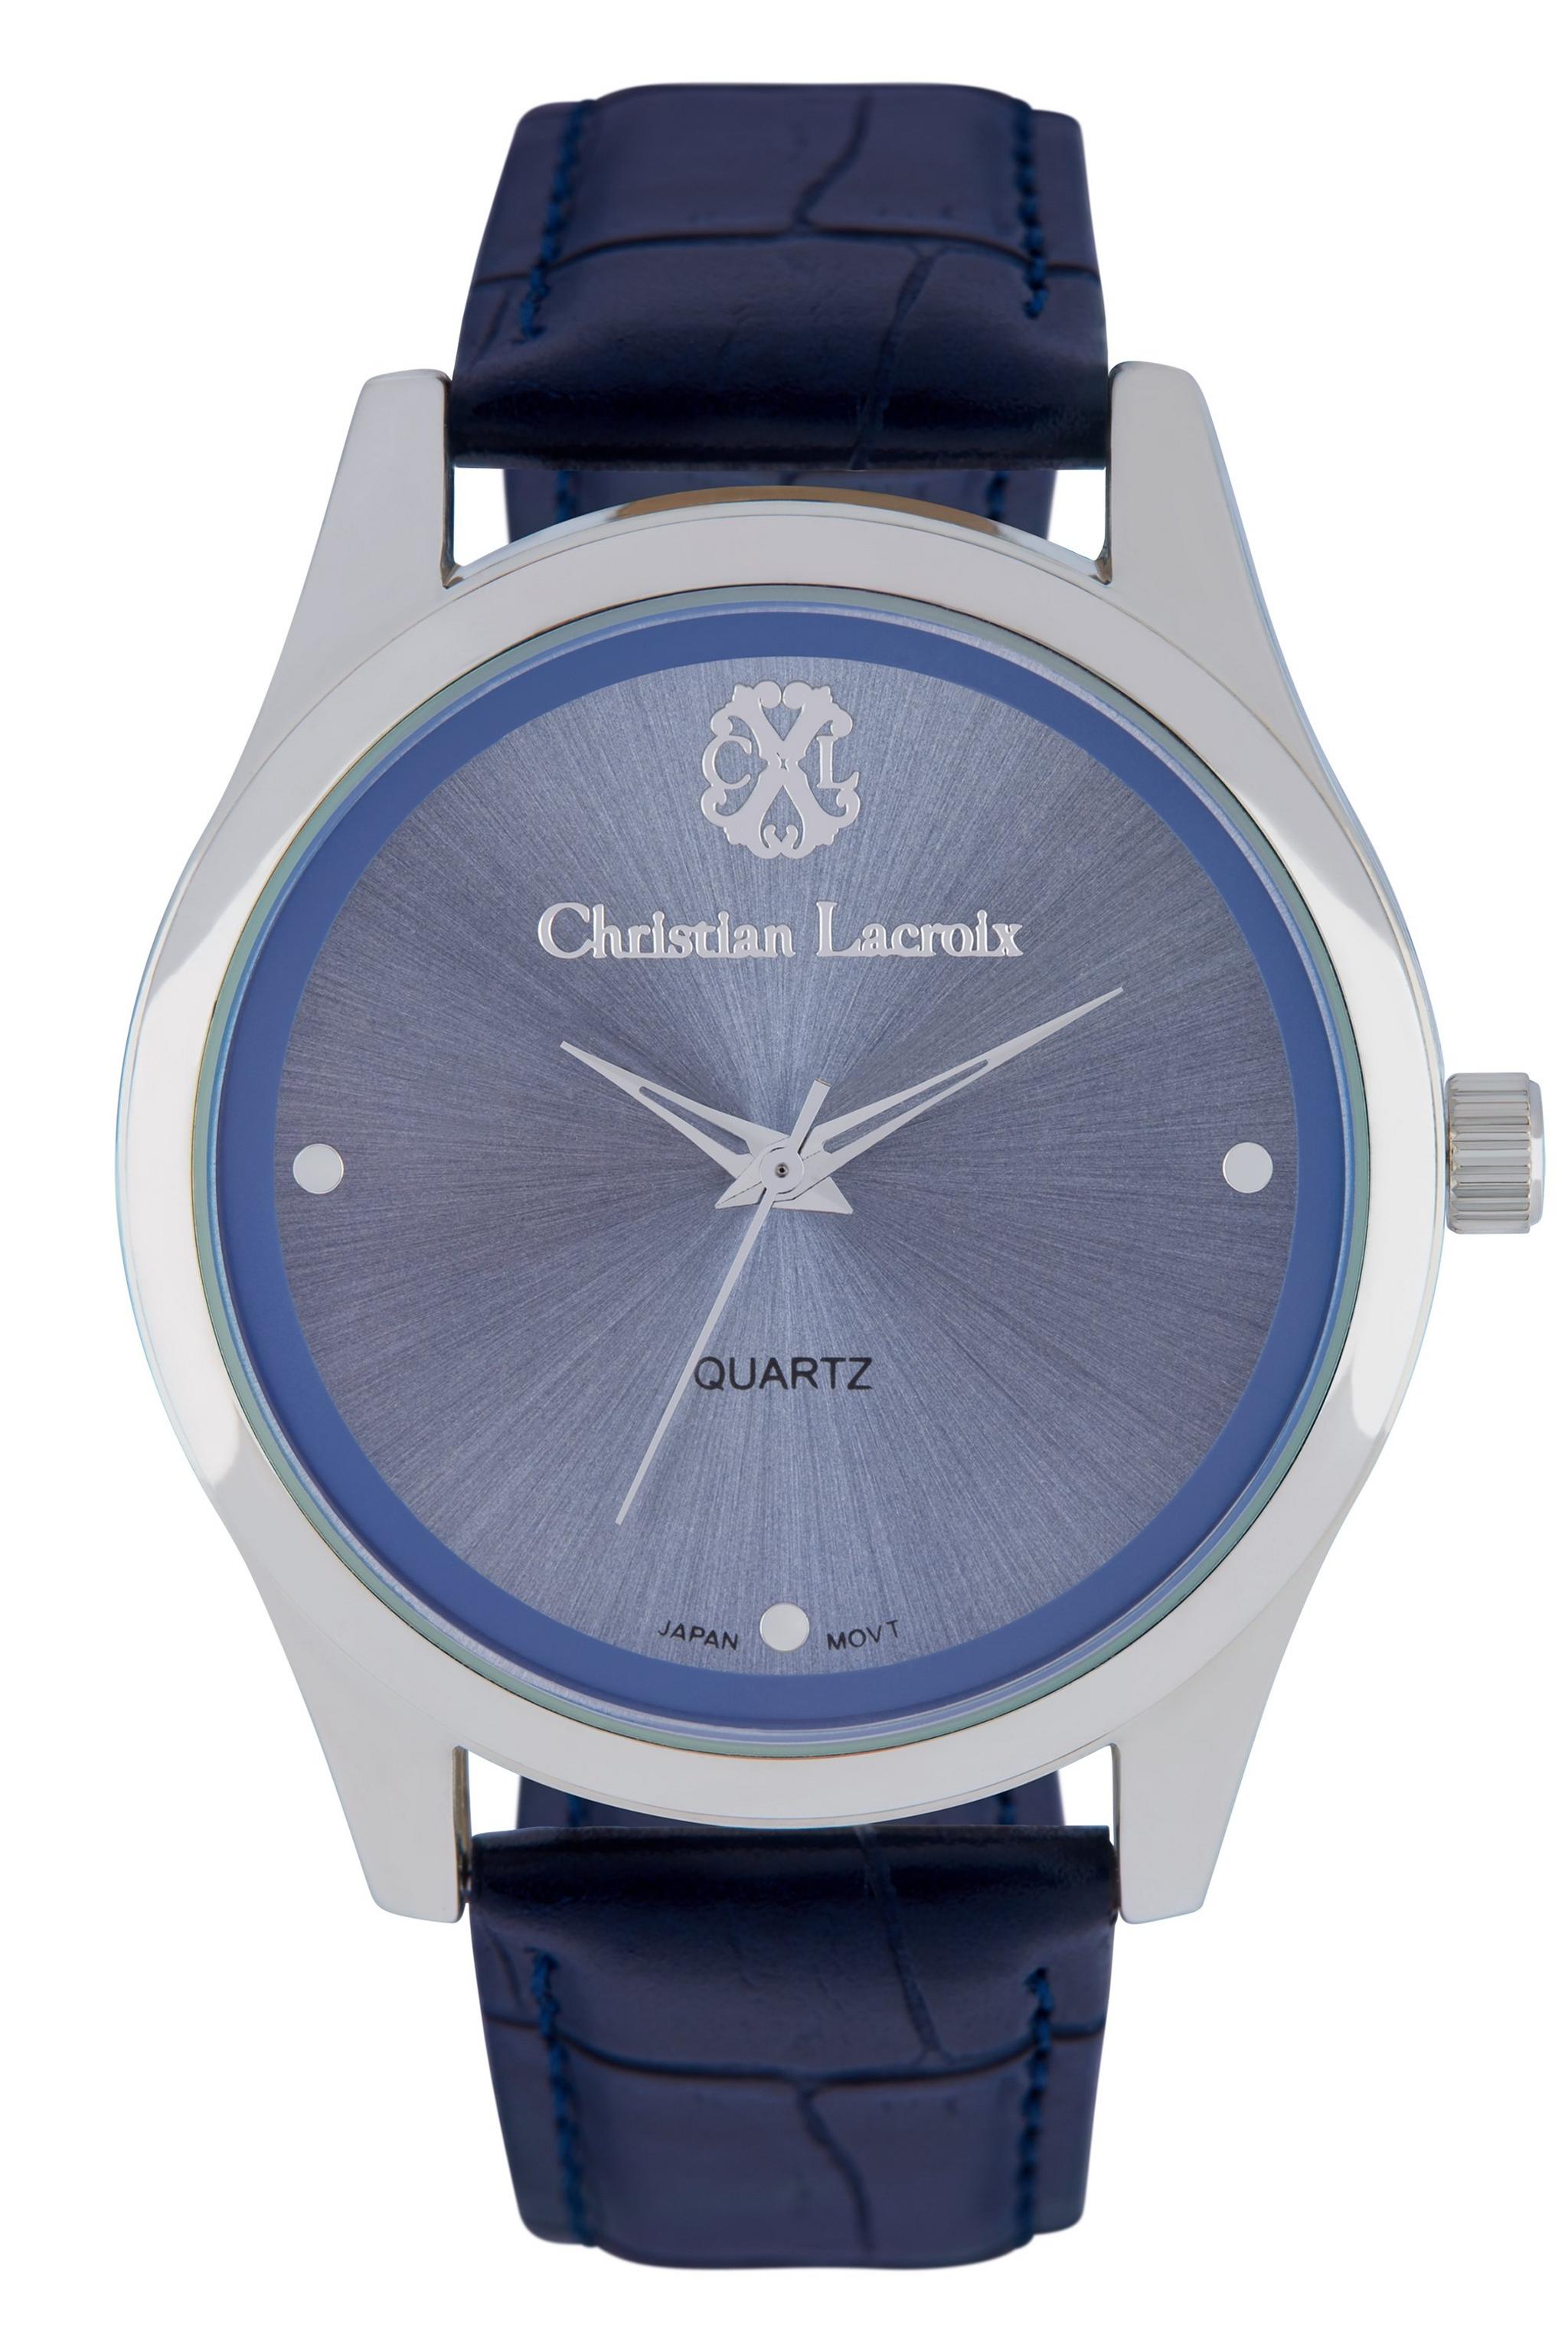 Christian Lacroix 41mm Analog Gents' Leather Watch - CXLS18008